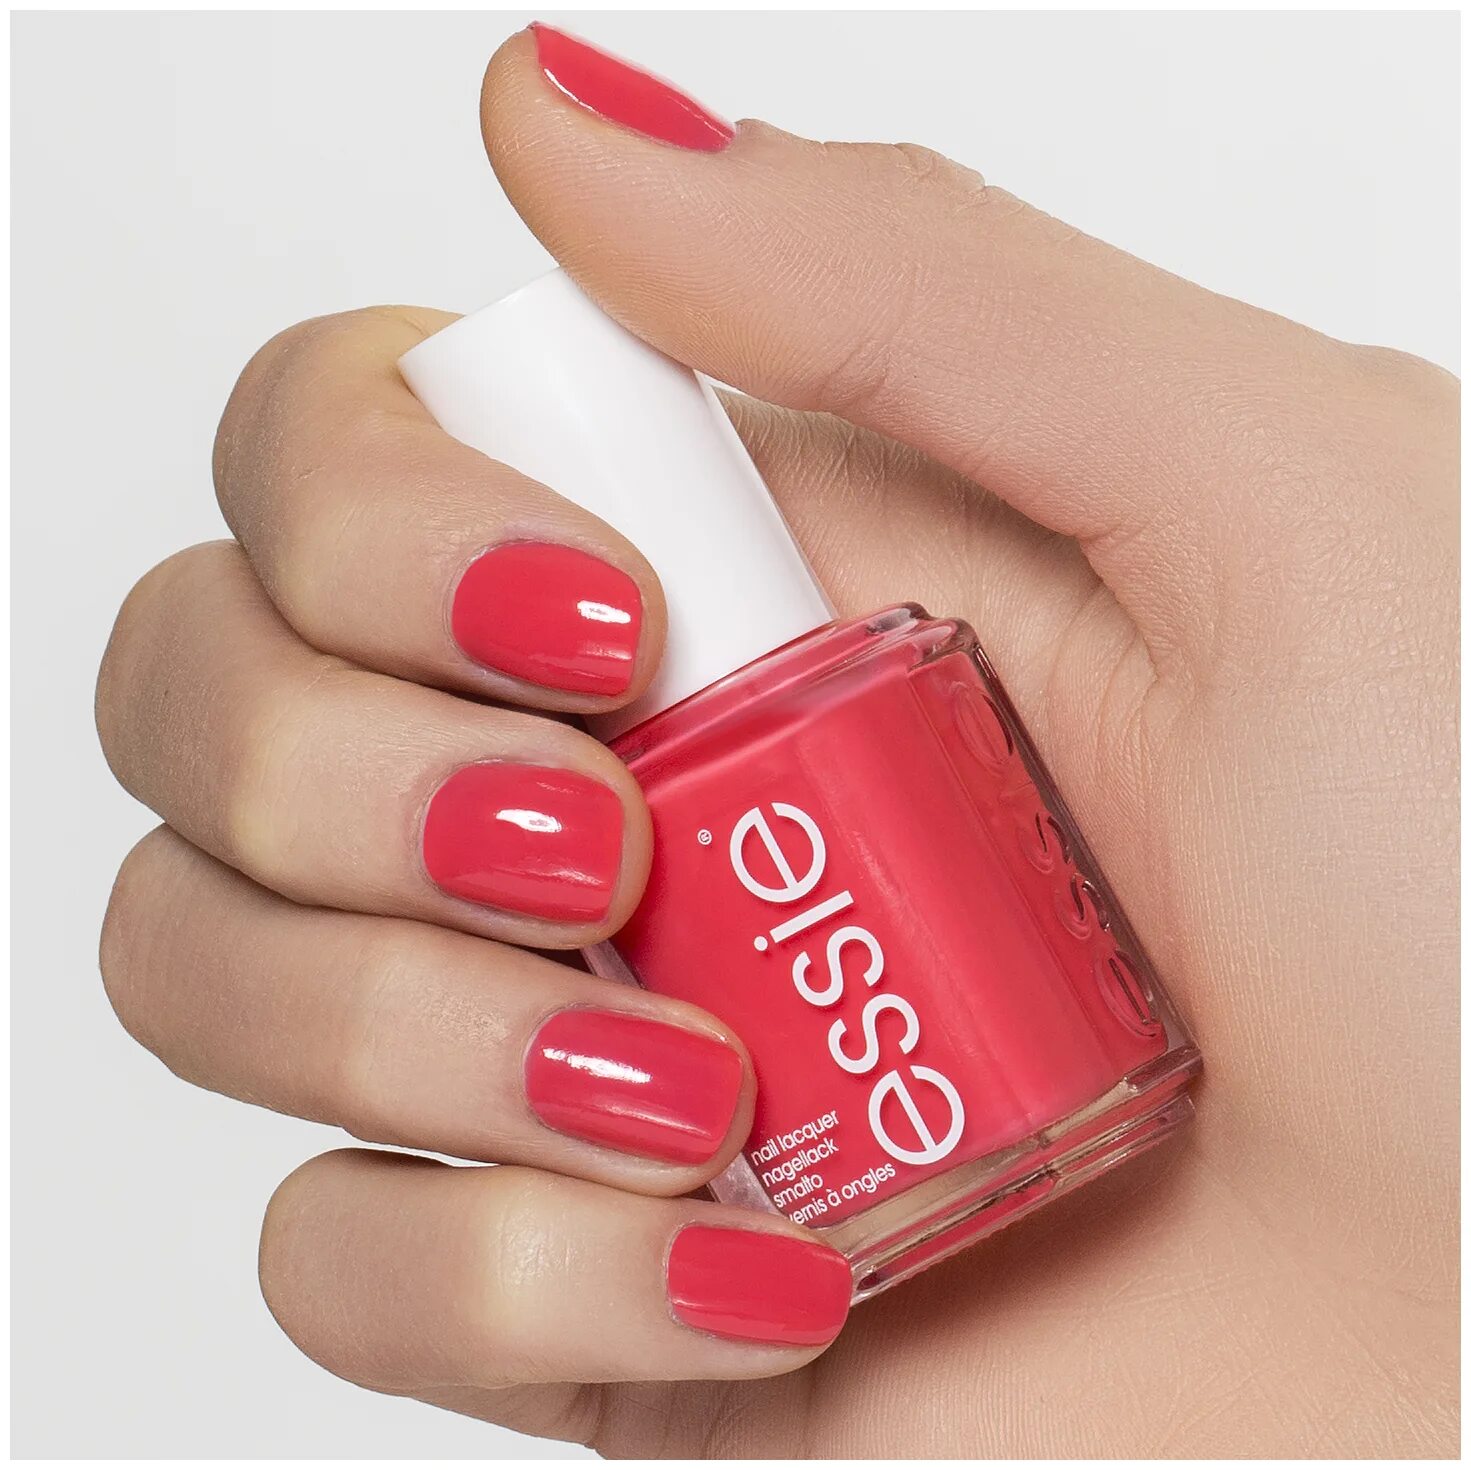 Какой лак отзывы. Лак для ногтей Essie 73. Лак Essie Nail Lacquer, 13.5 мл. Essie 73 милашка лак для ногтей. Essie лак для ногтей, оттенок 73 "милашка".